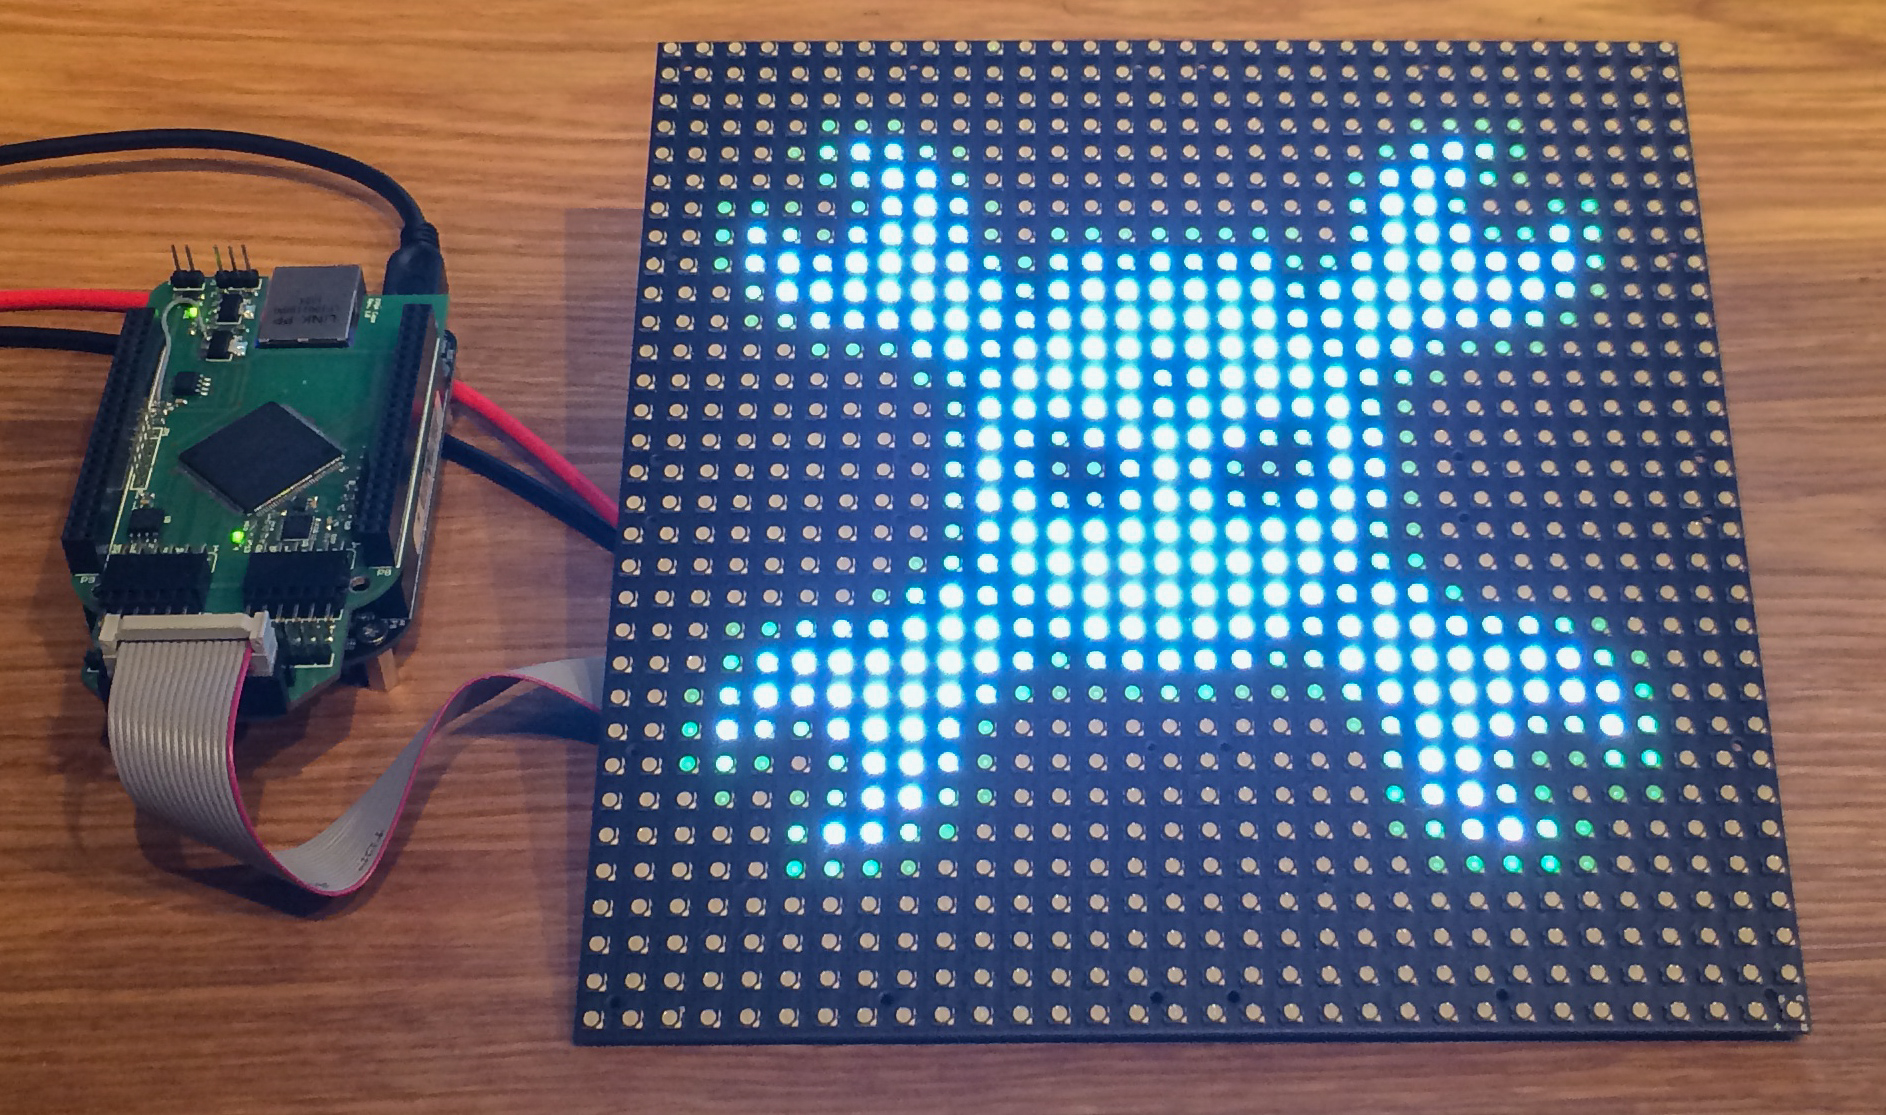 LED matrix test setup